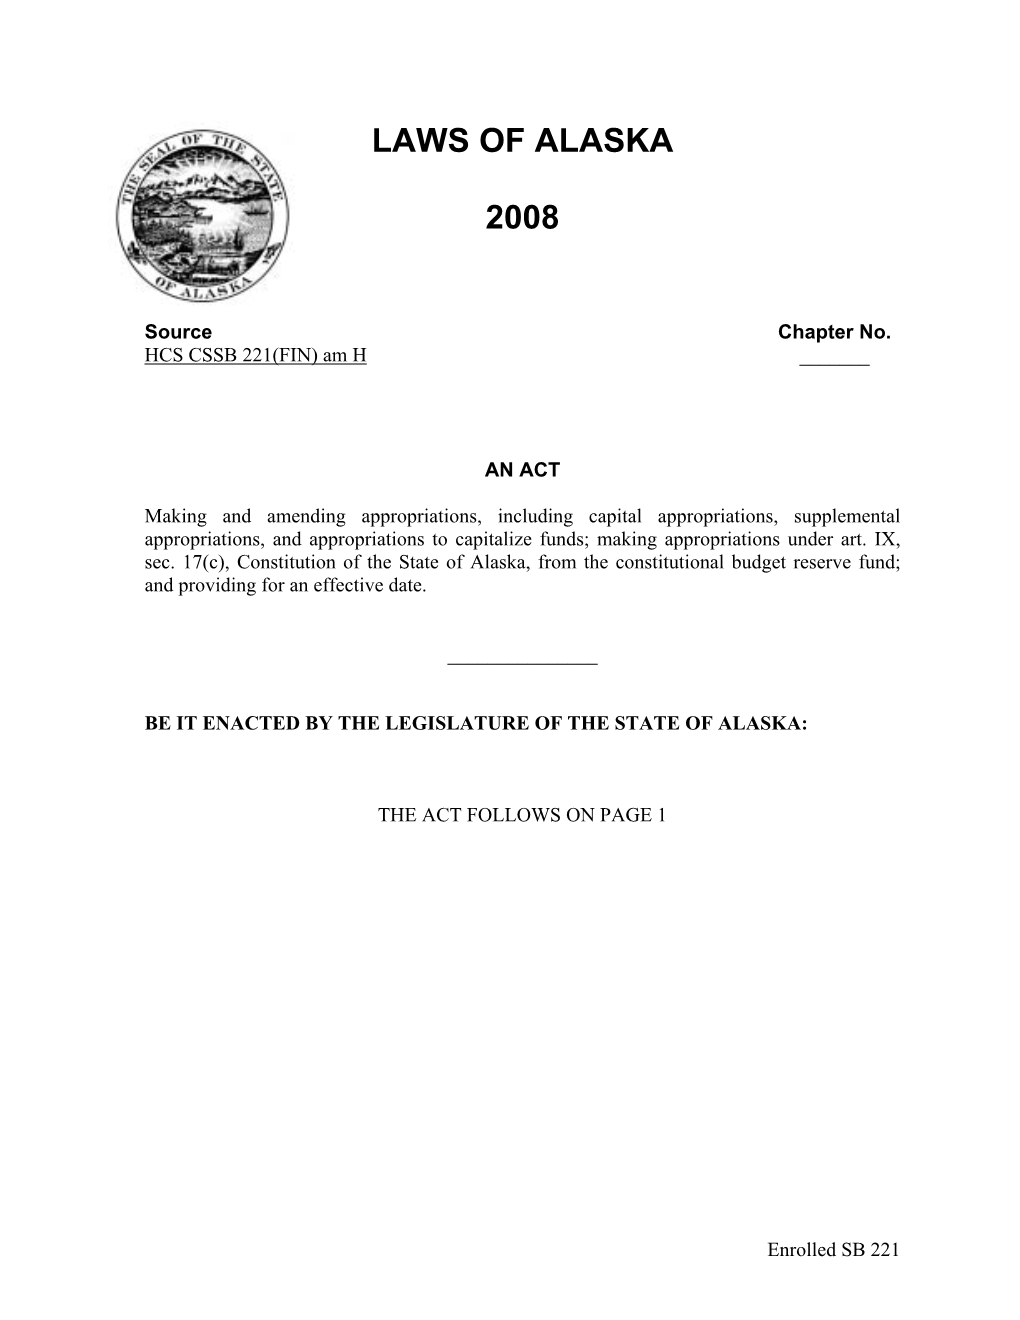 Laws of Alaska 2008